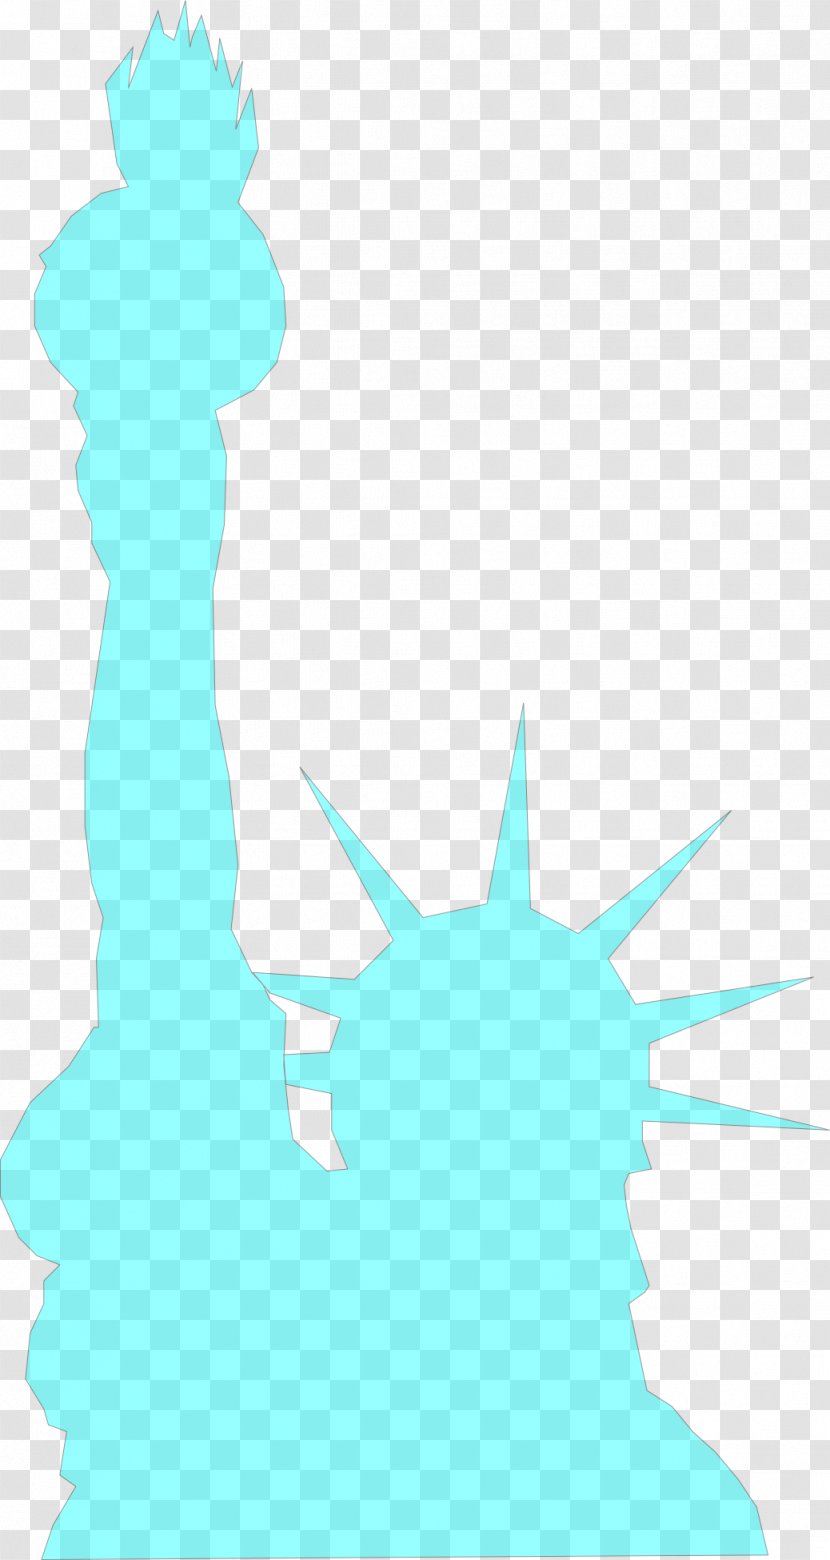 Statue Of Liberty Image Symbol Thumbnail - Leaf Transparent PNG